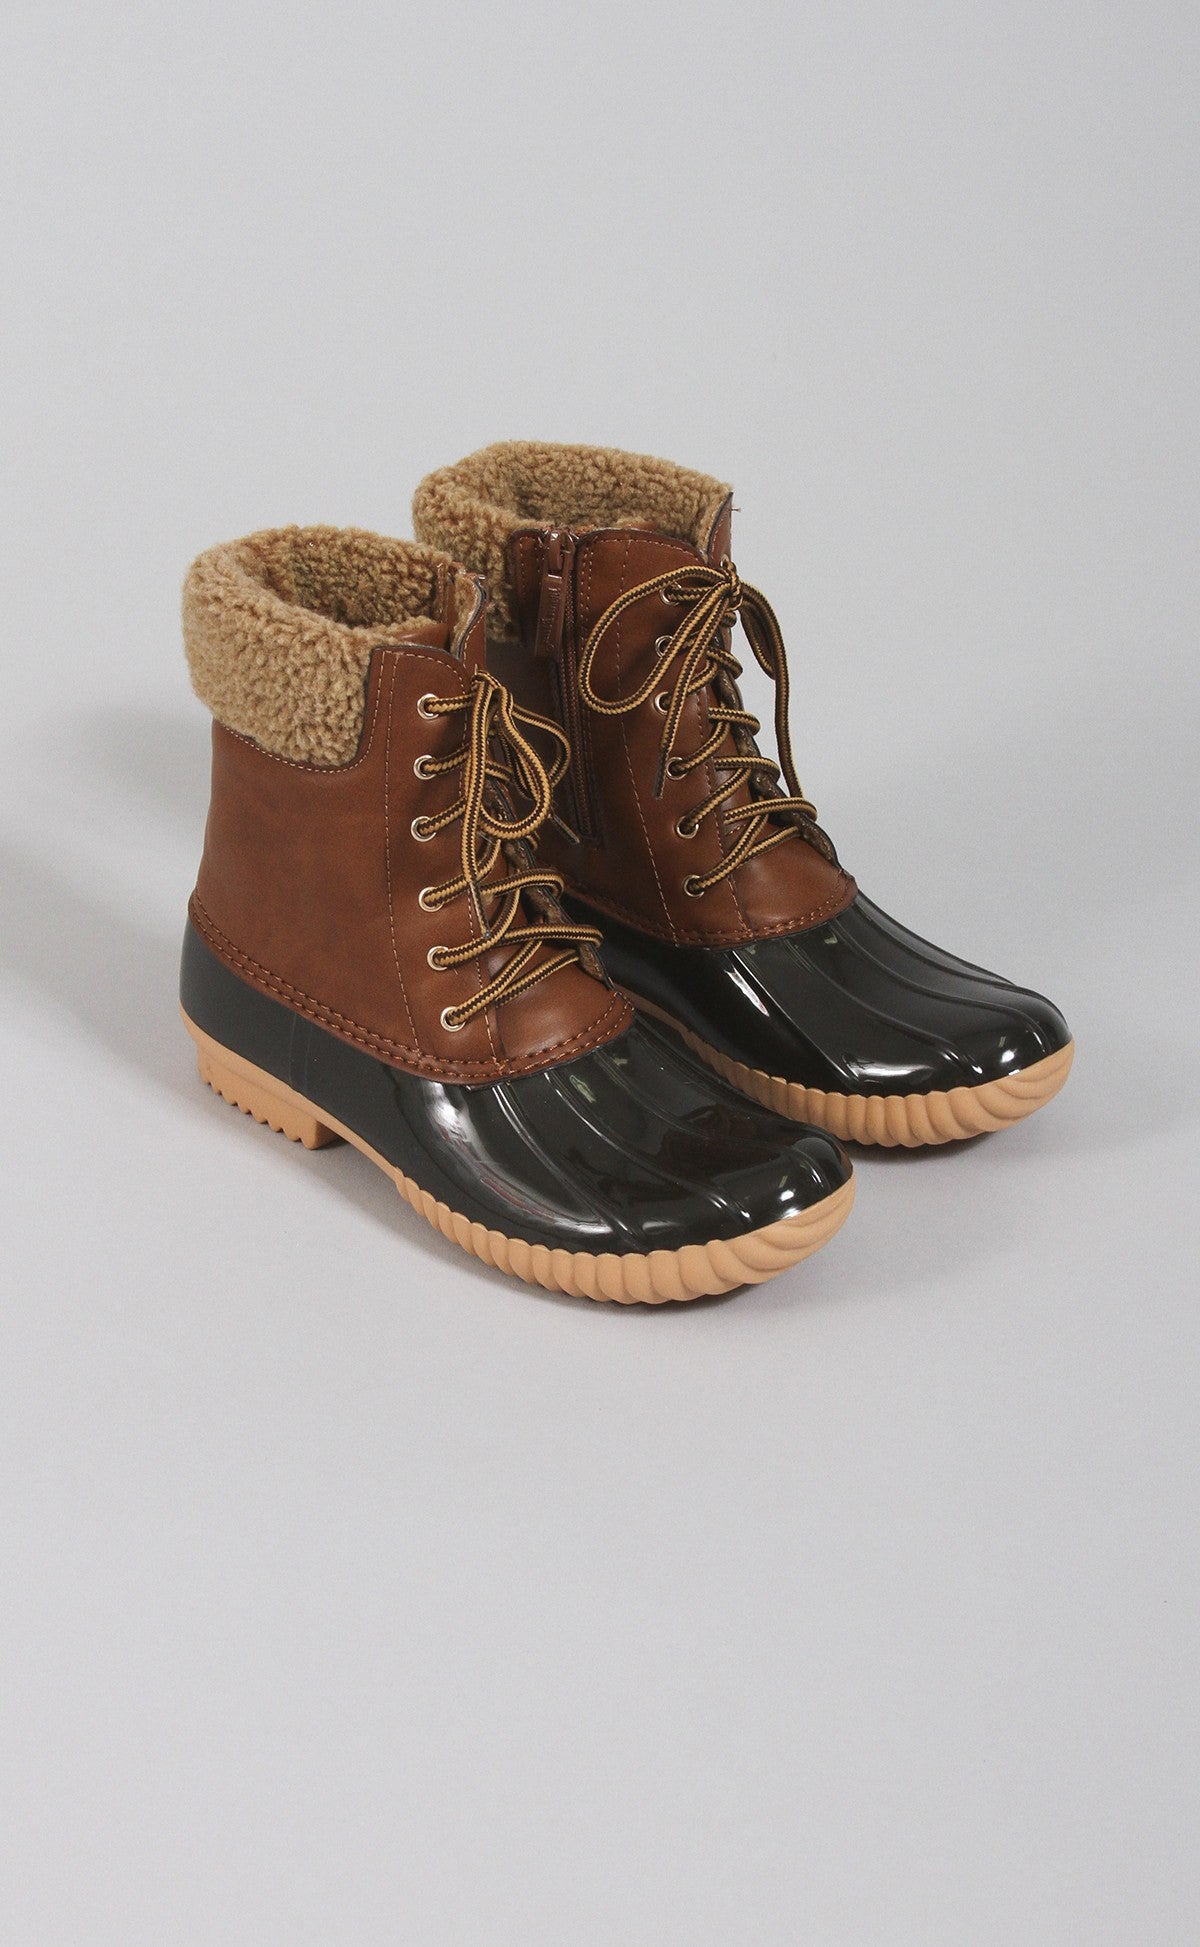 everyday all-weather boots – ShopRiffraff.com